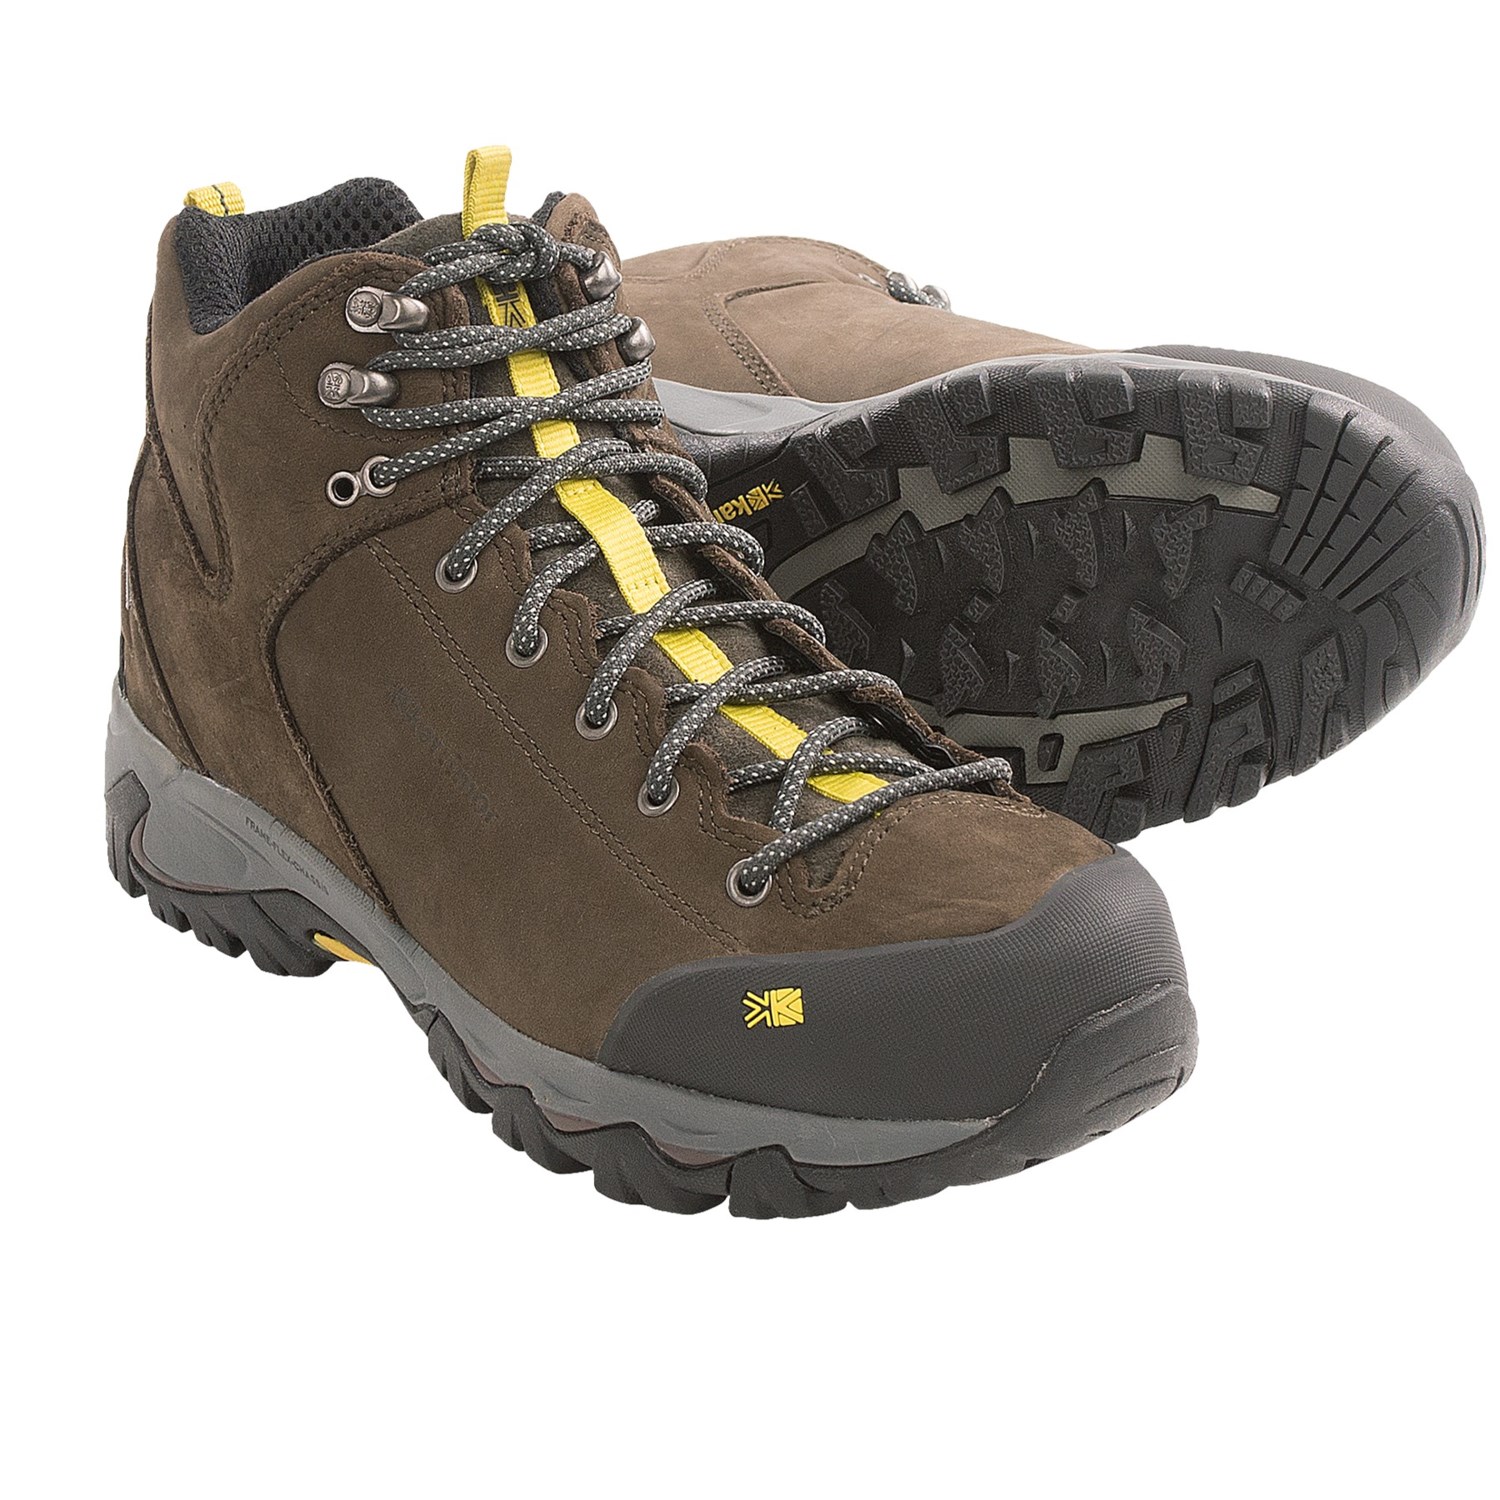 Karrimor Notus Mid Weathertite Hiking Boots (For Men) 7409R - Save 66%